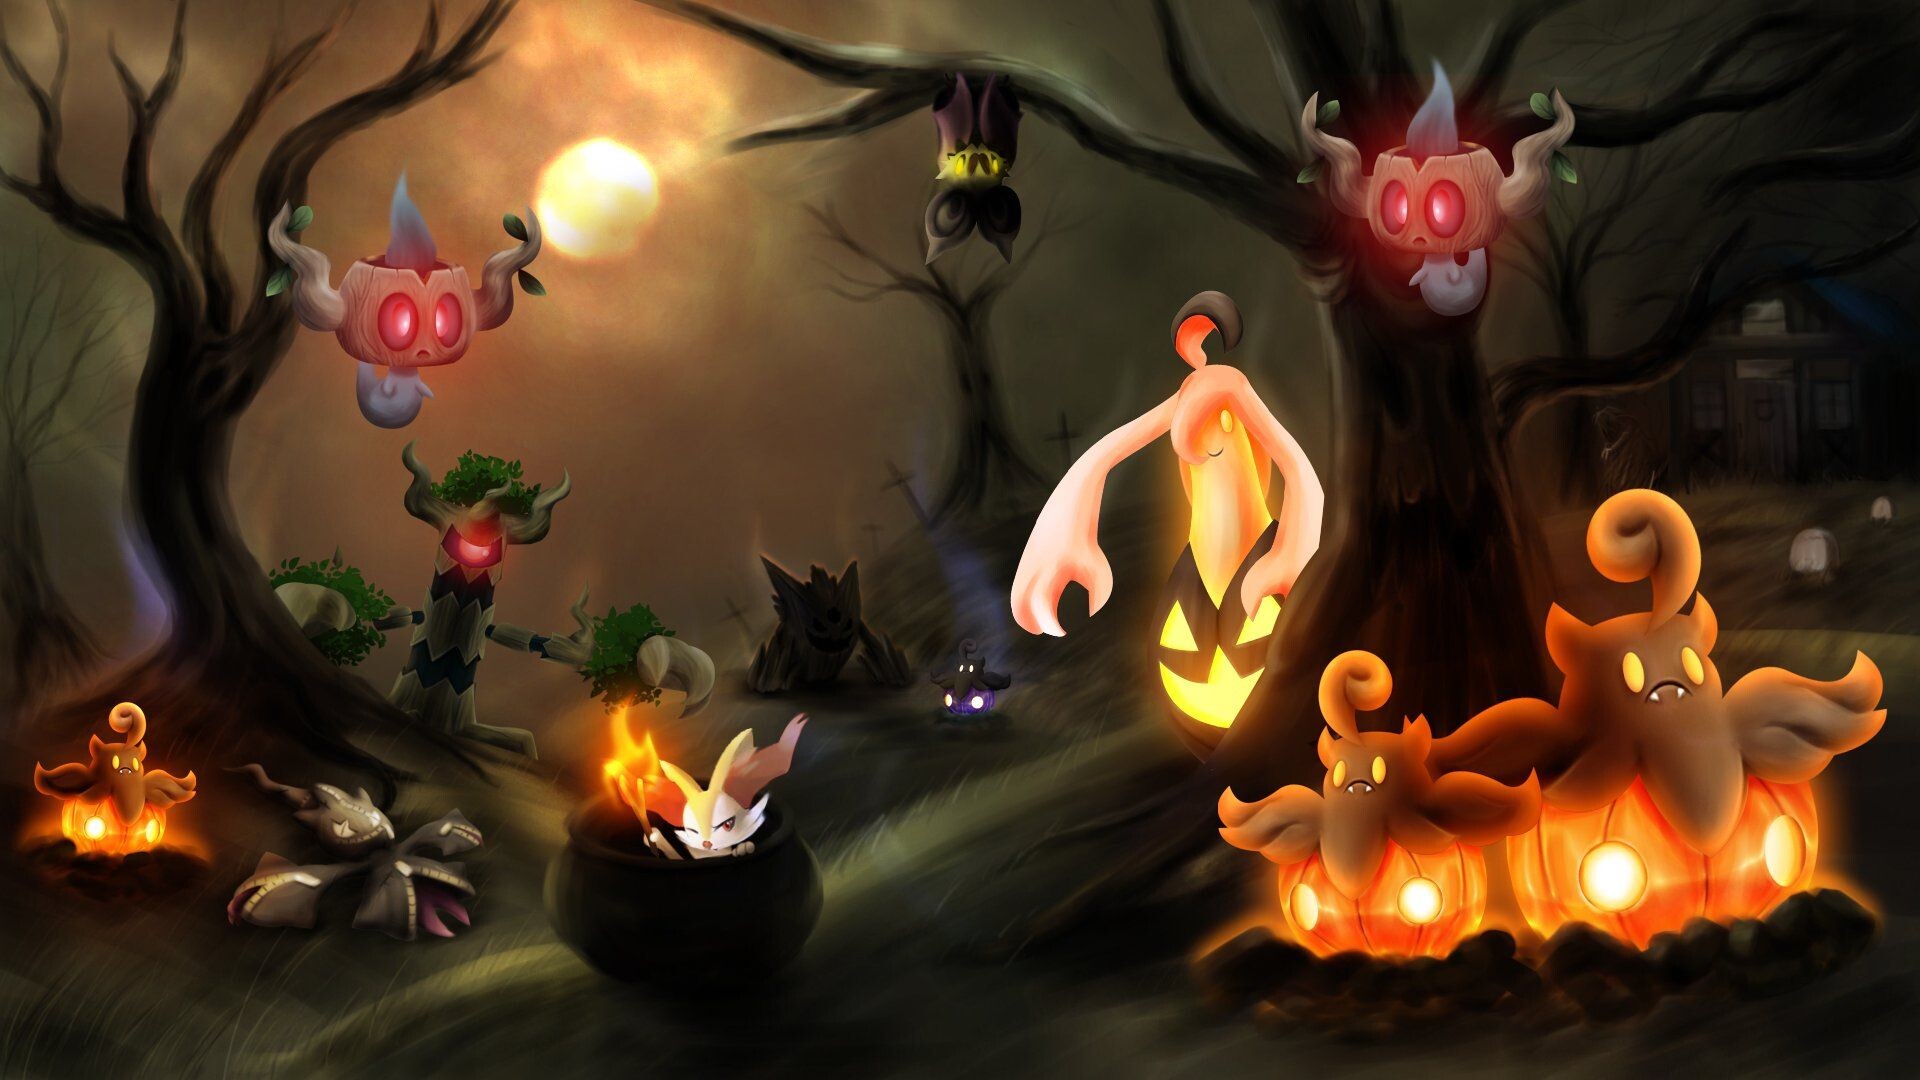 Halloween Pokmon wallpaper, Spooky artwork, Ghostly celebrations, Eerie visuals, 1920x1080 Full HD Desktop